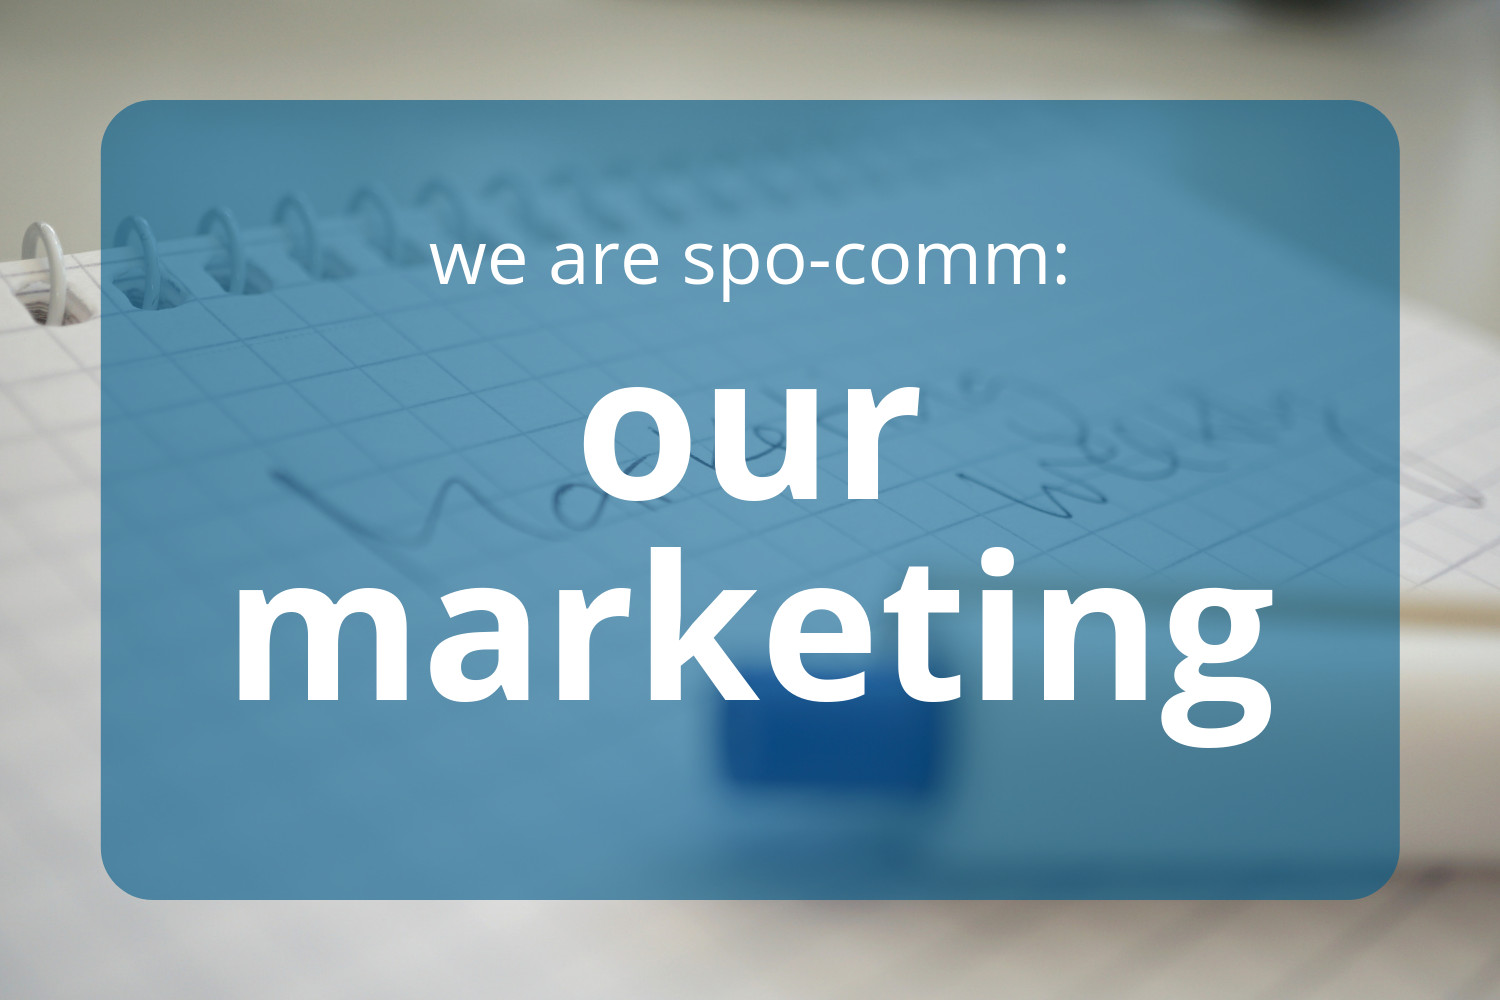 Content & Conversions: The spo-comm Marketing team